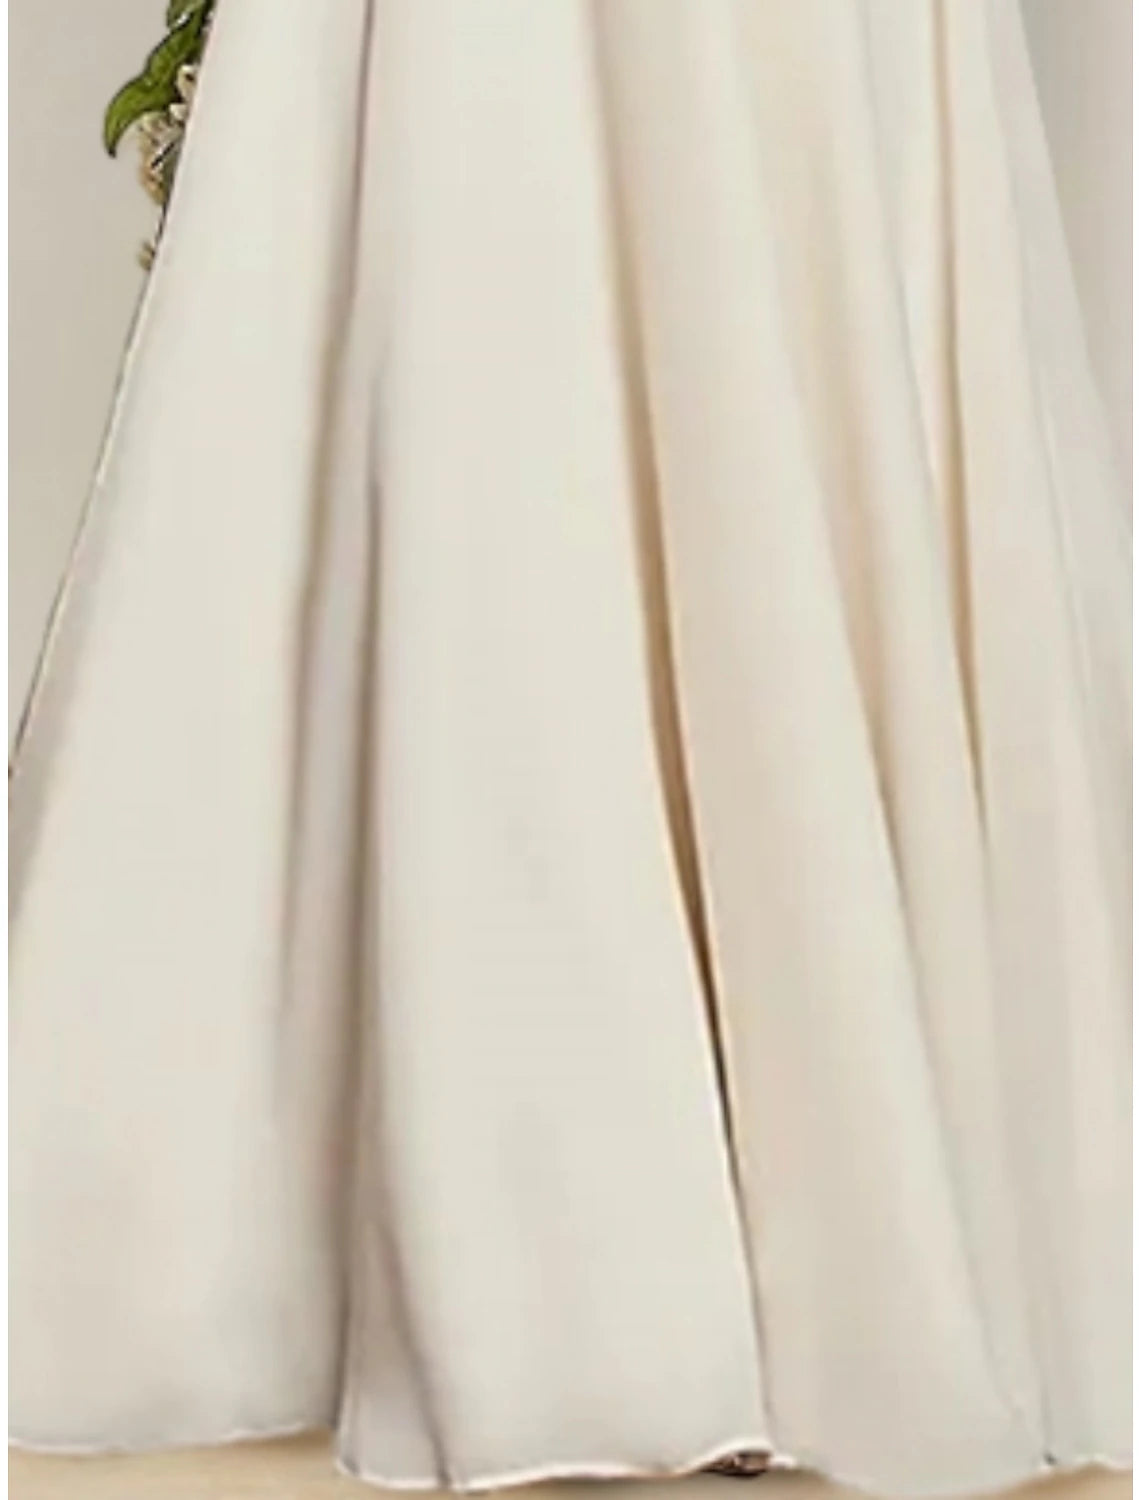 Sheath / Column Mother of the Bride Dress Wedding Guest Vintage Elegant Scoop Neck Floor Length Chiffon Lace Half Sleeve with Pleats Crystal Brooch